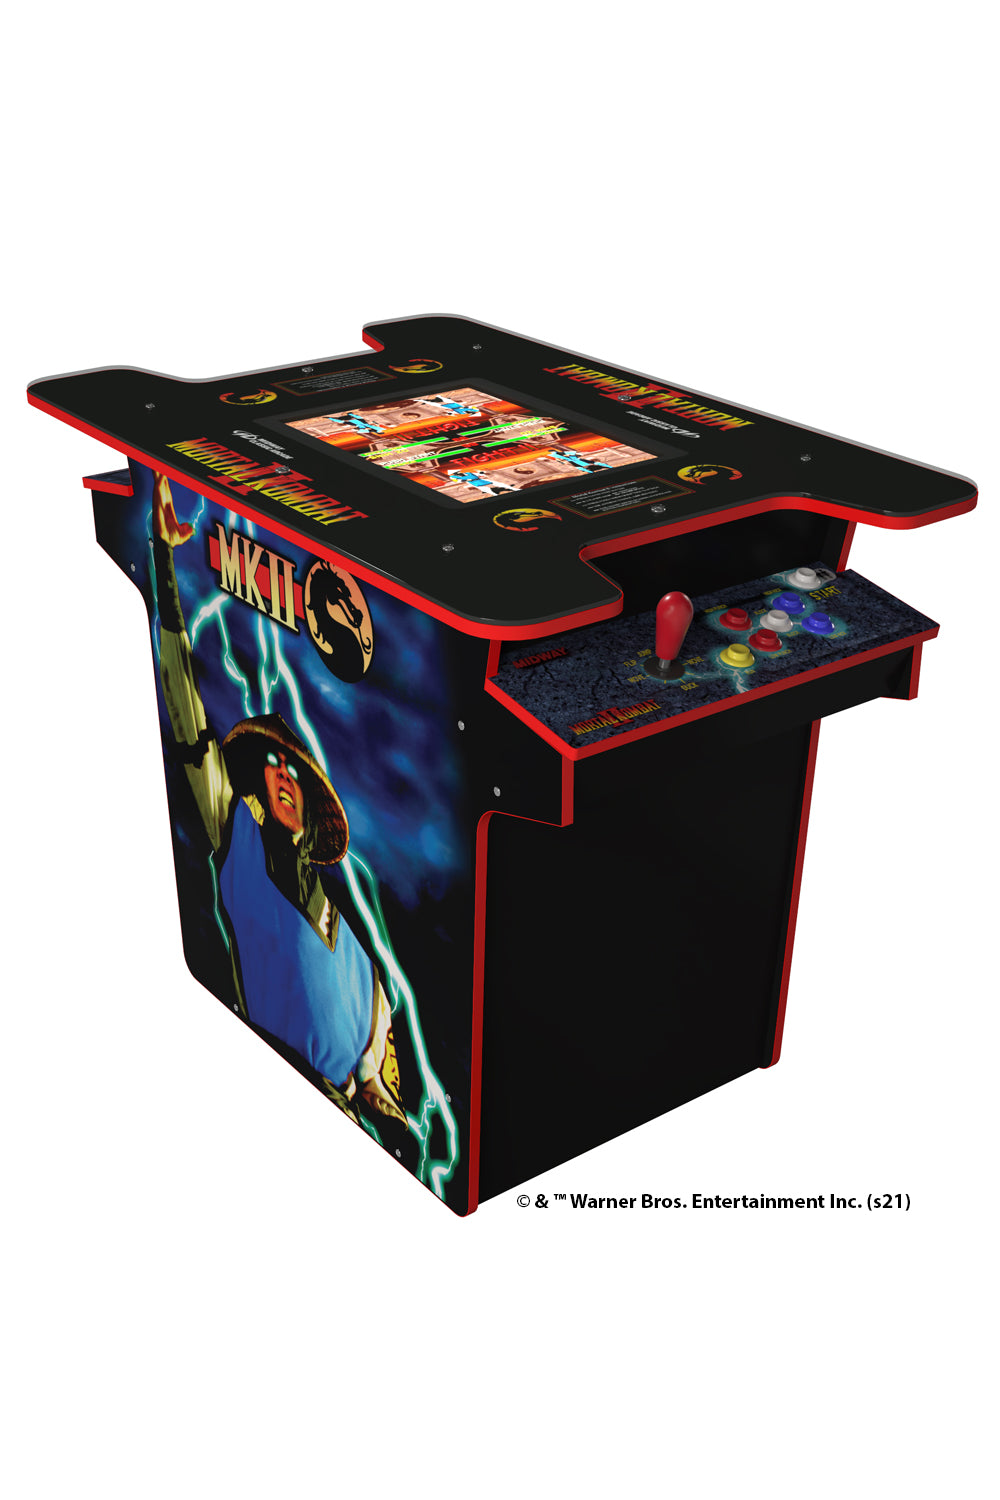 Mortal Kombat Head To Arcade Table